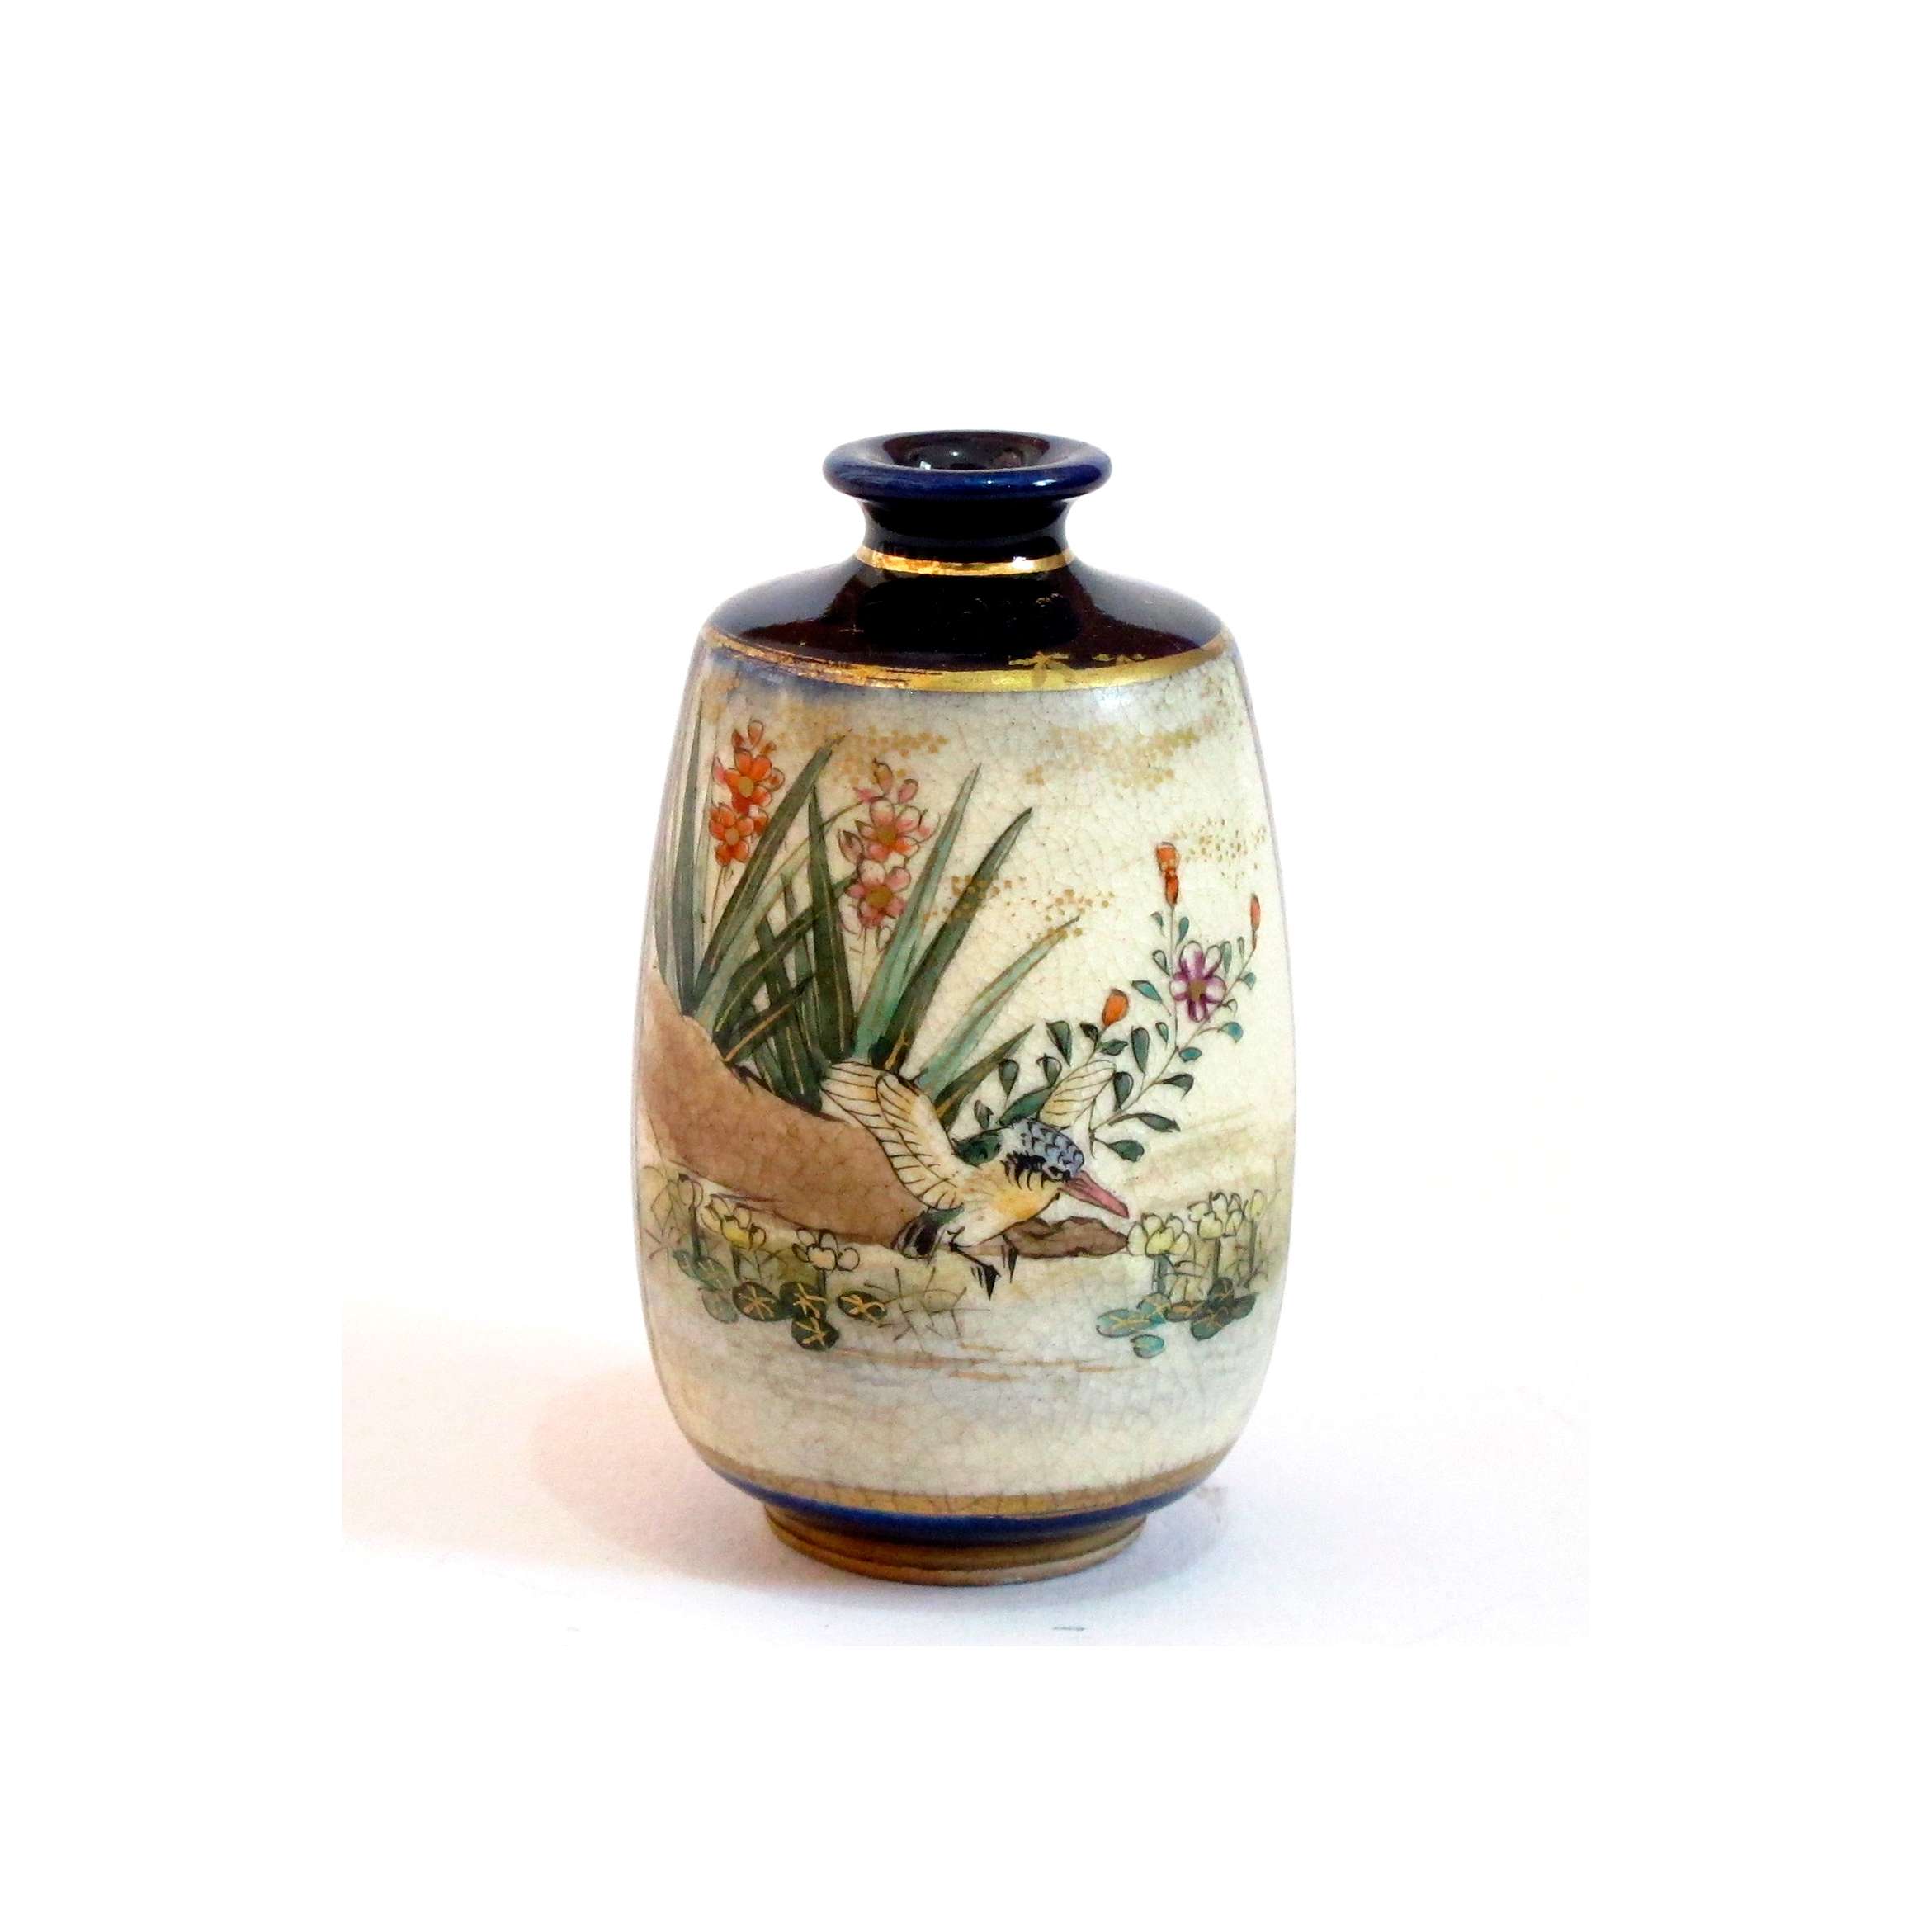 Vase satsuma vintage japanese Collecting Satsuma